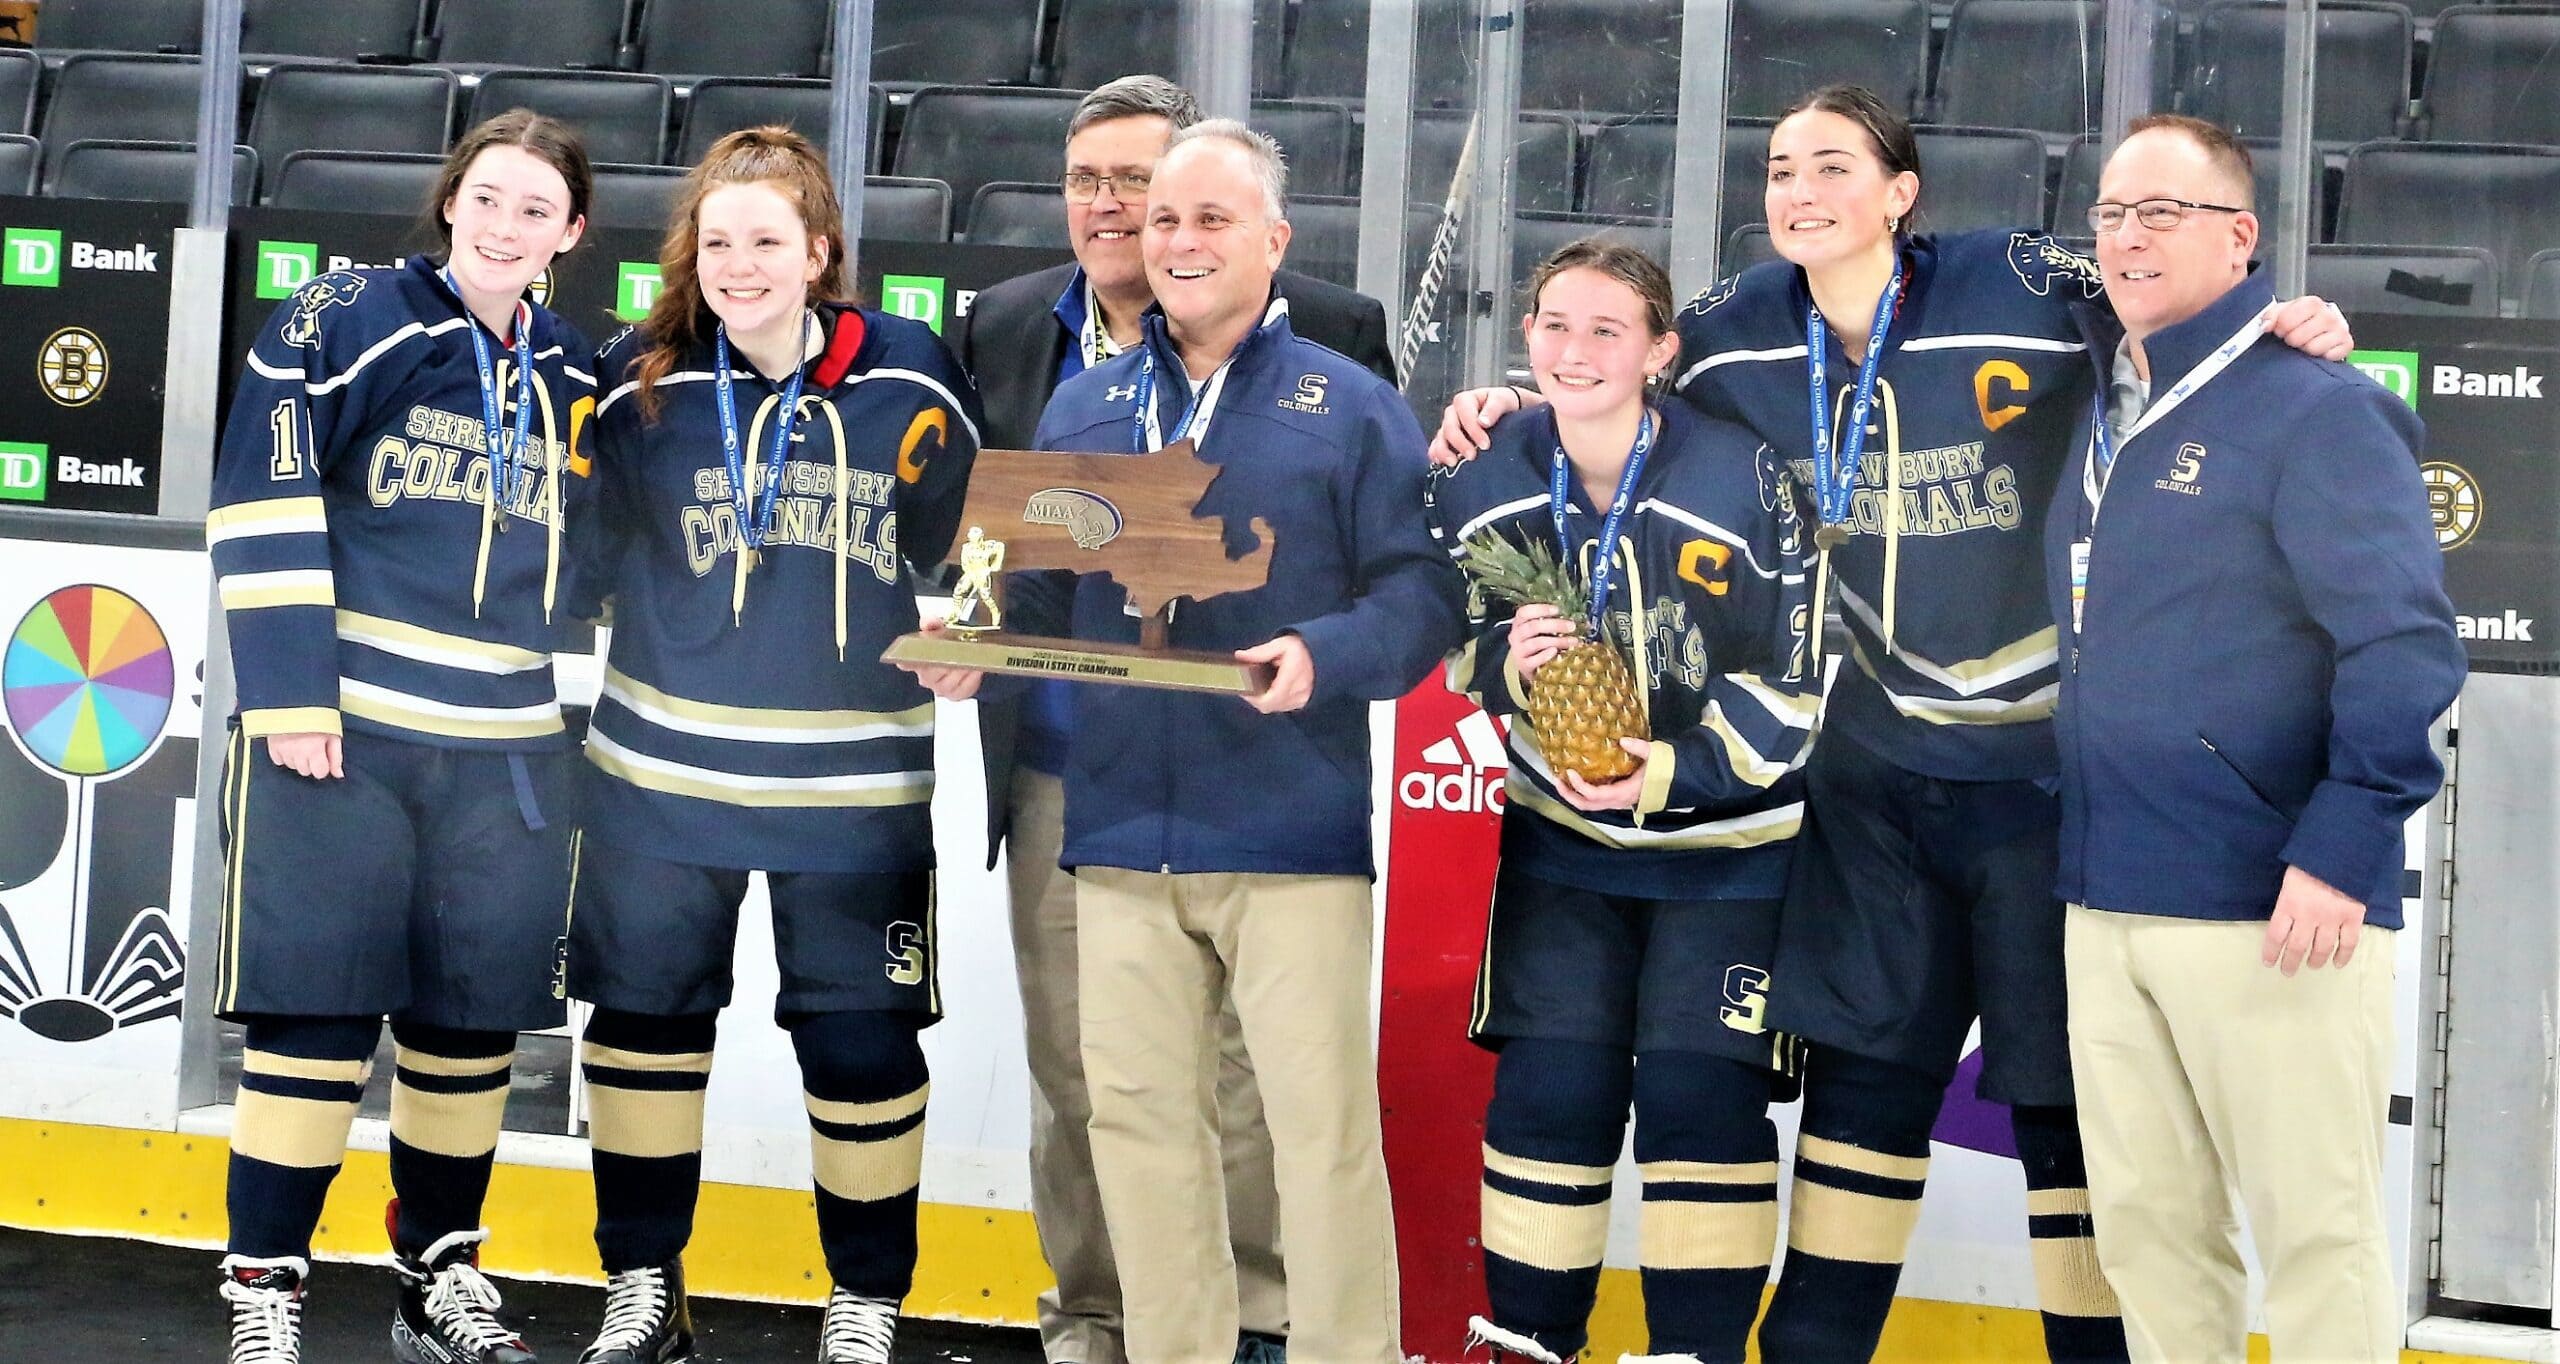 Colonials hockey team wins state championship